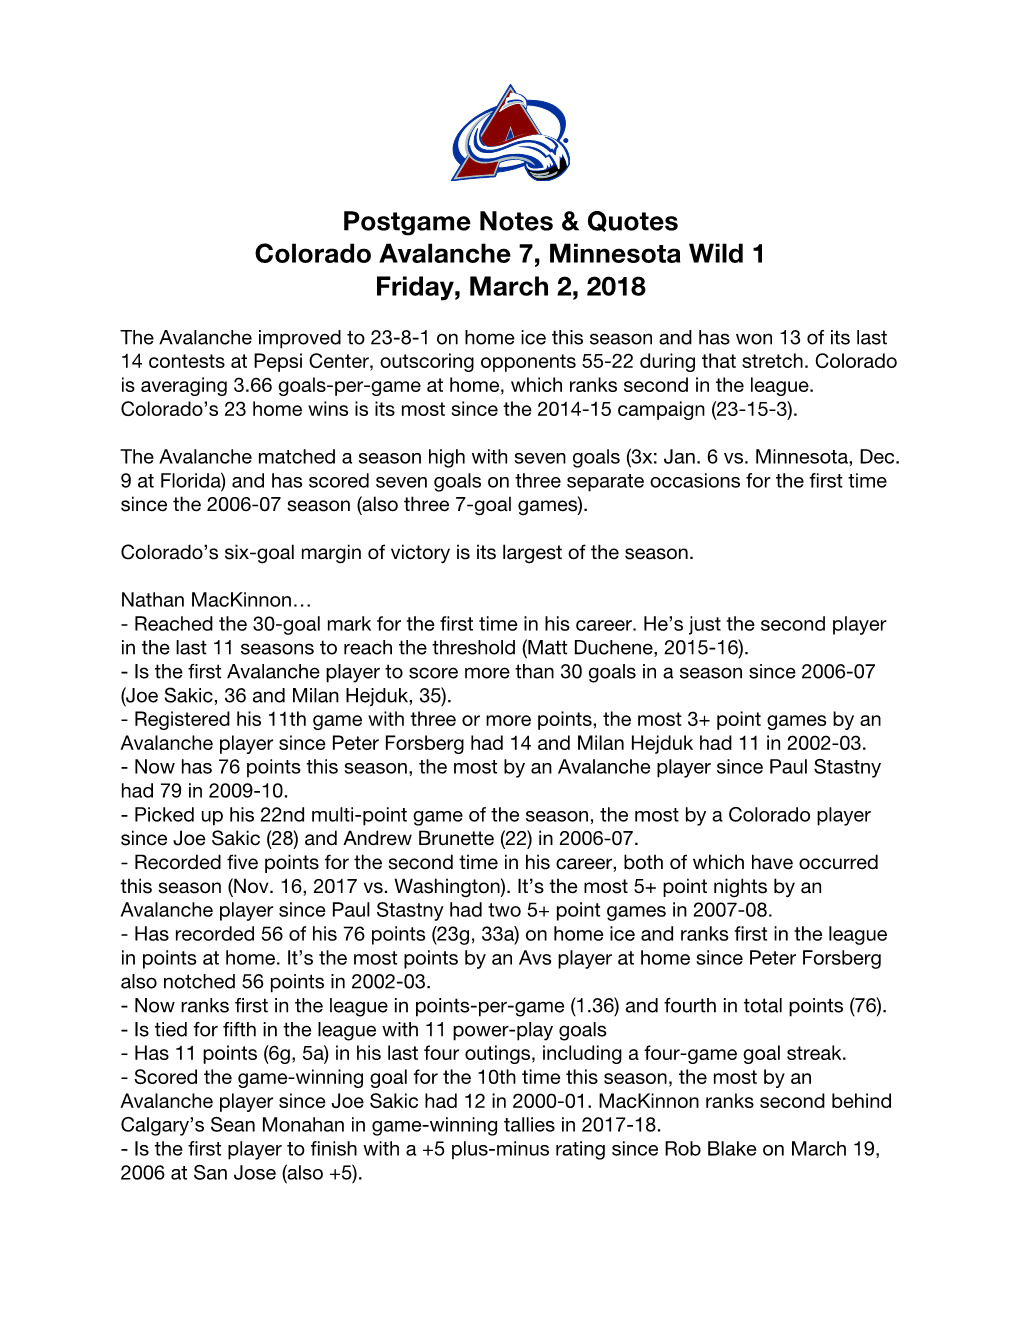 Postgame Notes & Quotes Colorado Avalanche 7, Minnesota Wild 1